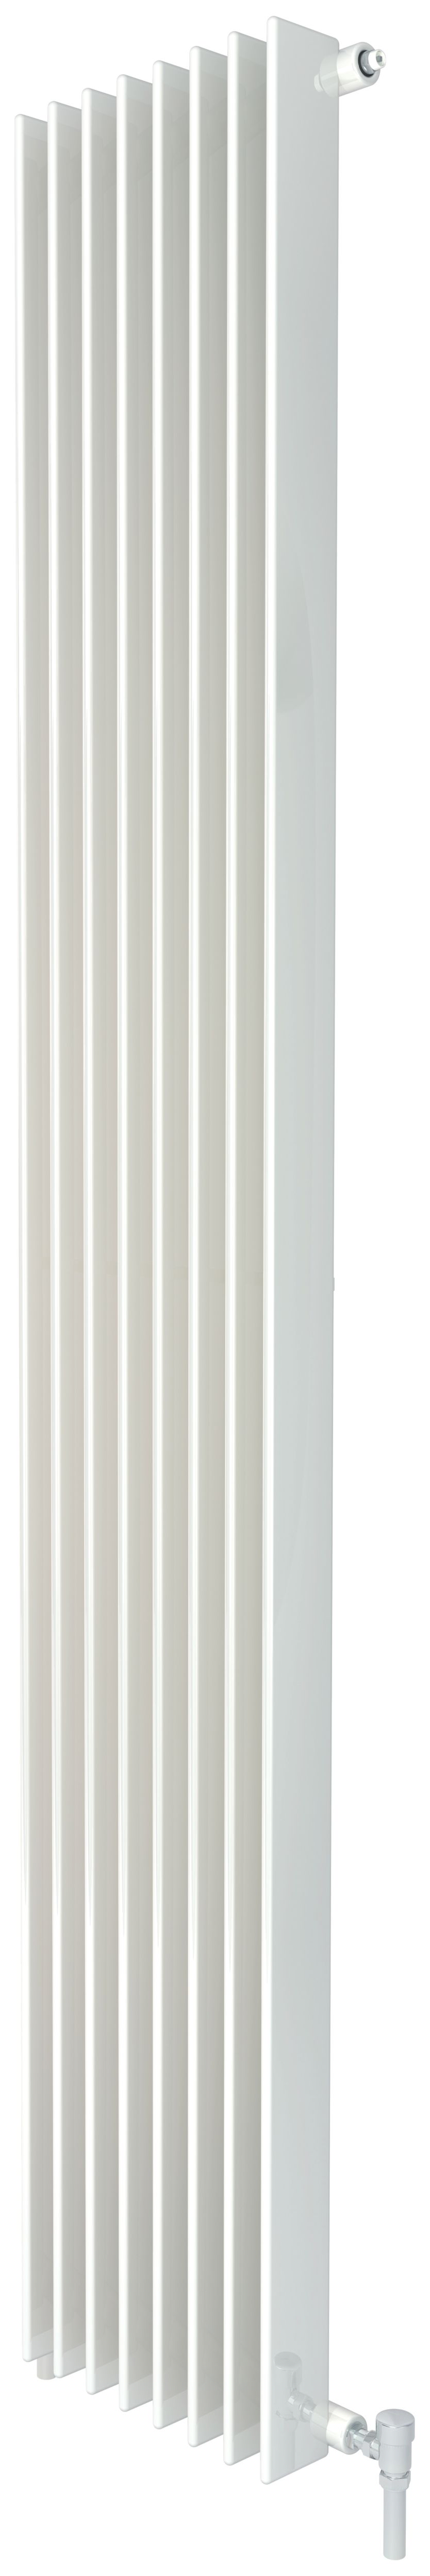 Image of Henrad Verona Slim Single Panel Vertical Designer Radiator - White 2000 x 320 mm